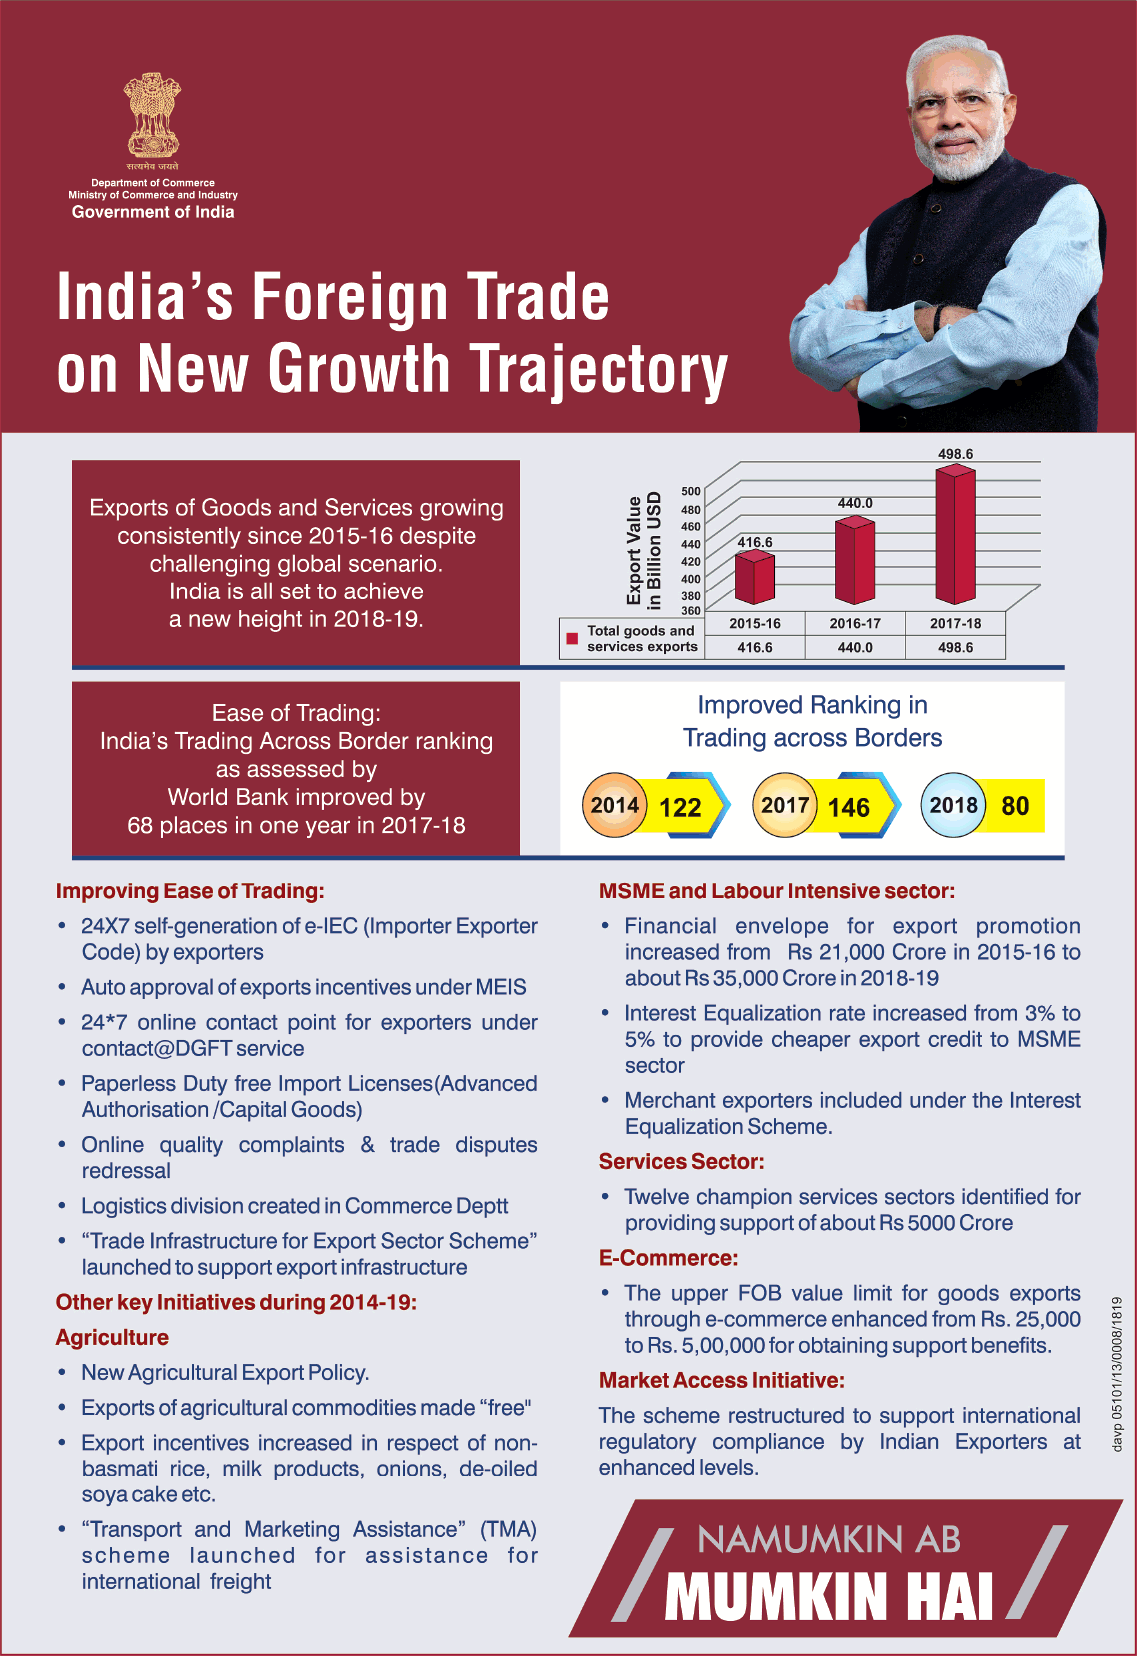 namumkin-ab-mumkin-hai-indias-foreign-trade-on-new-growth-trajectory-ad-times-of-india-delhi-10-03-2019.png